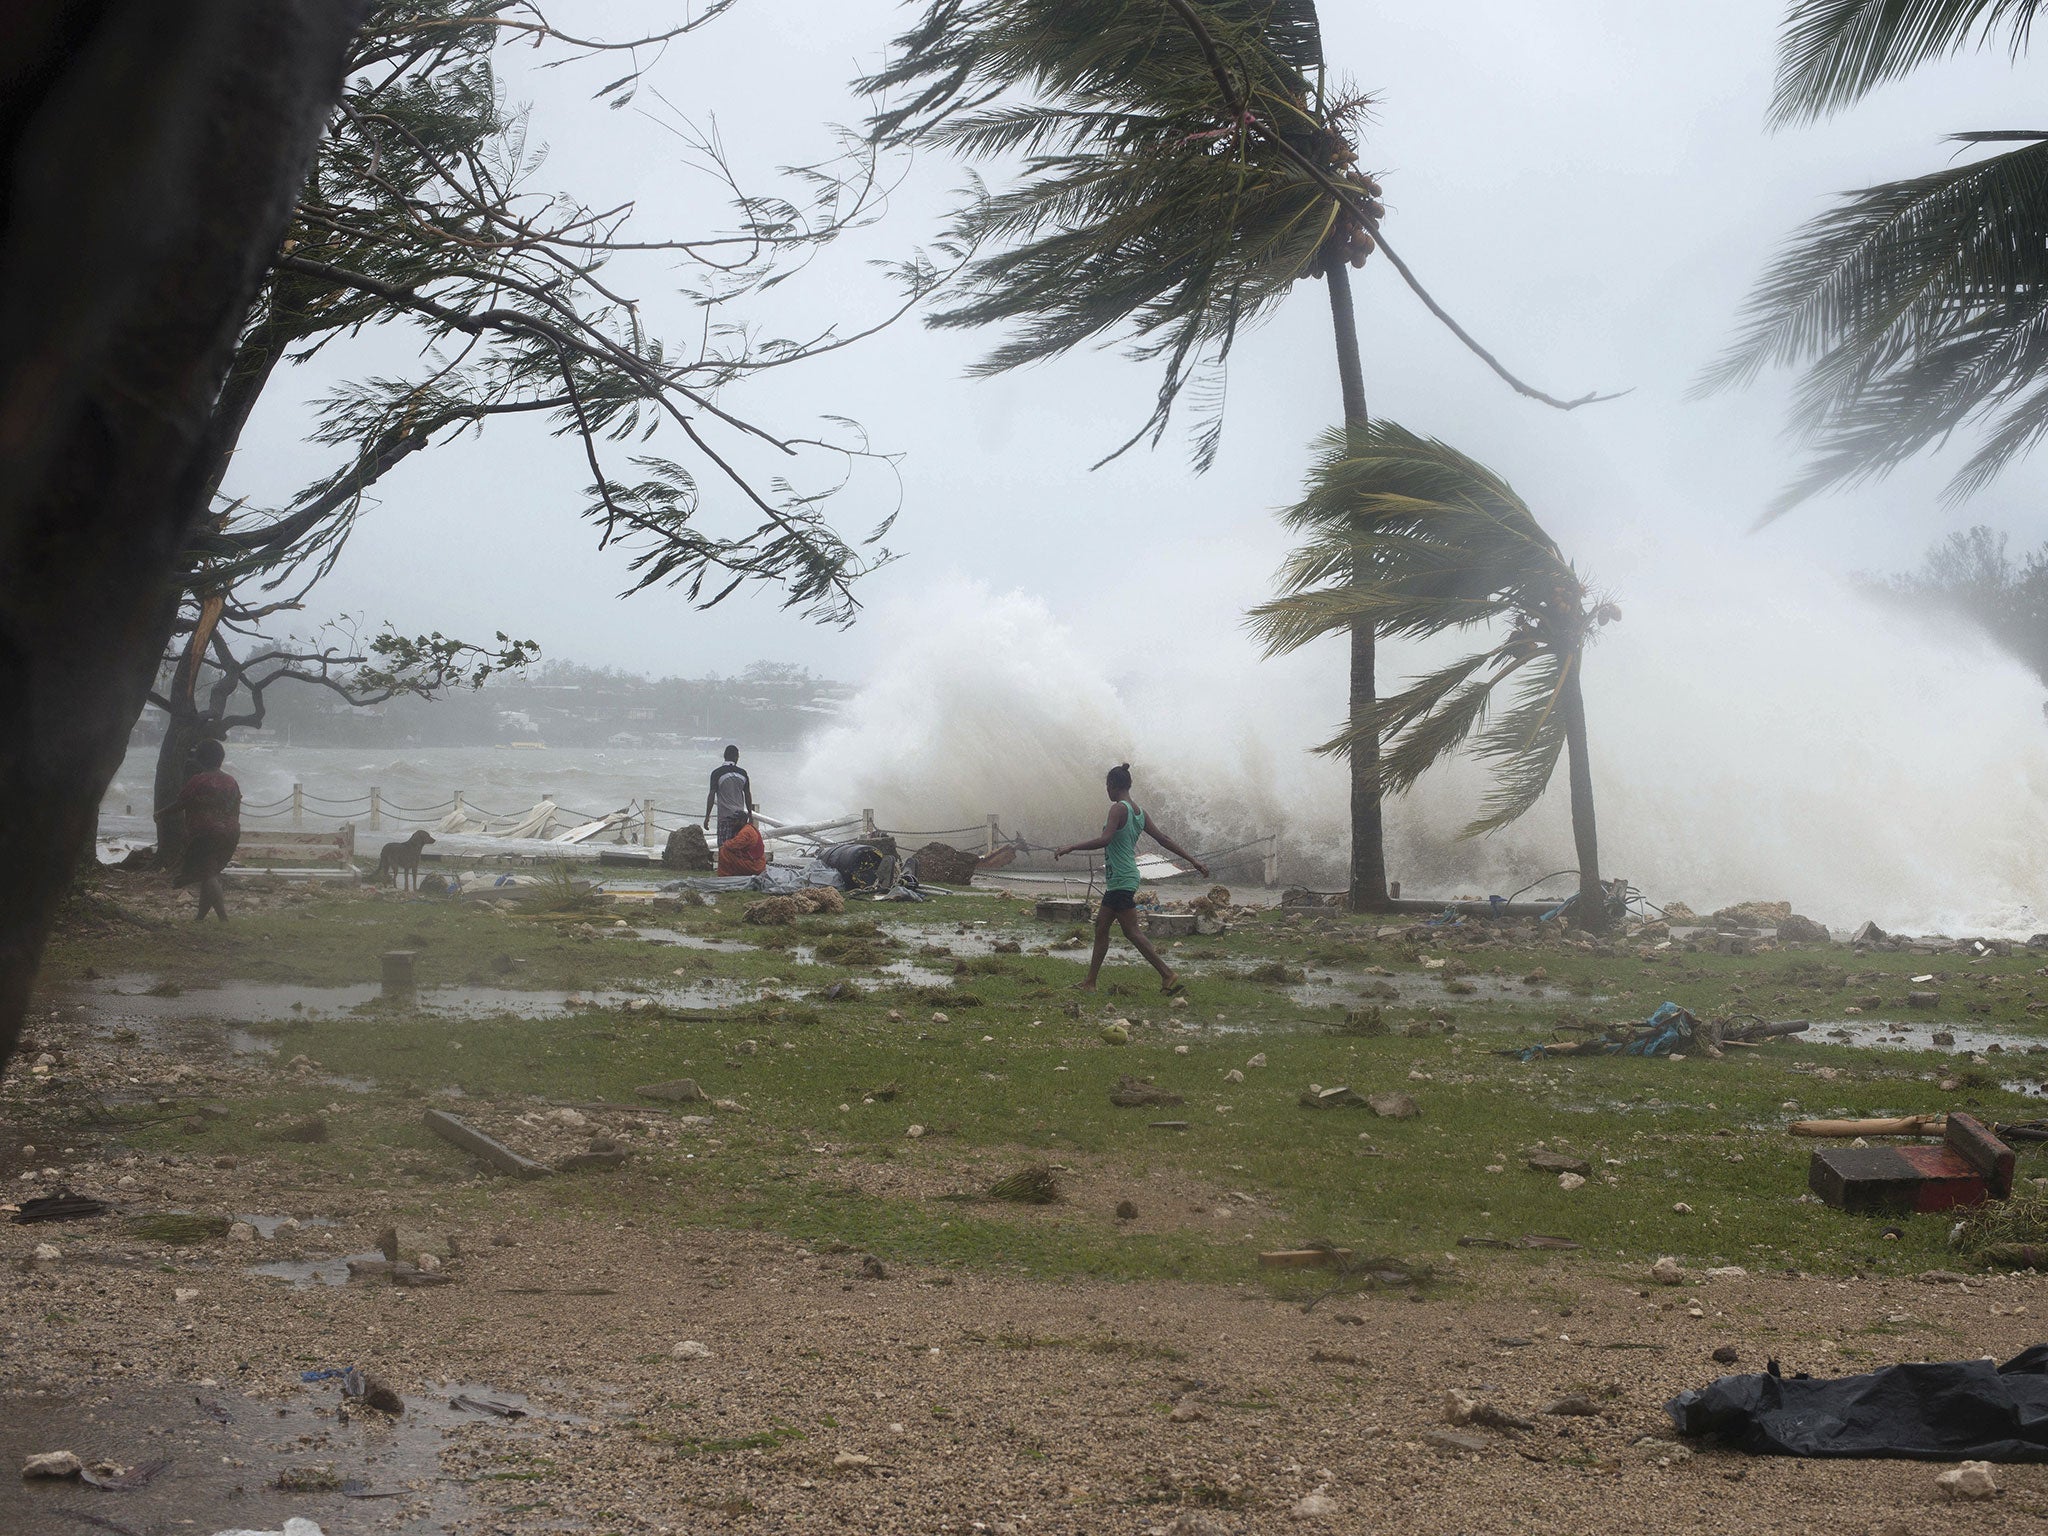 People walk along the shore where debris is scattered in Port Vila, Vanuatu on Saturday